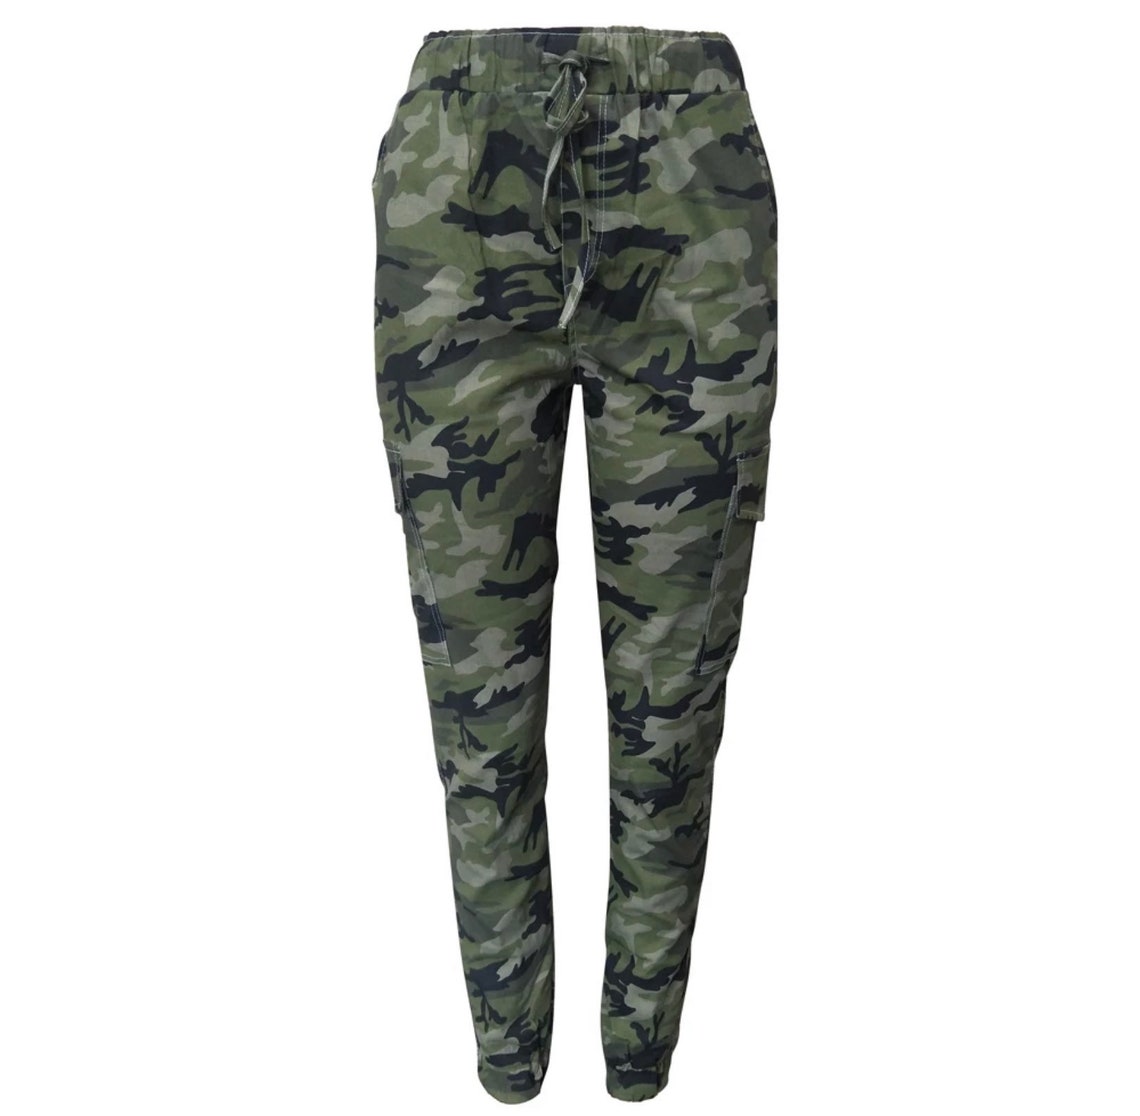 Women's camouflage pants fashionable soft pants. | Etsy